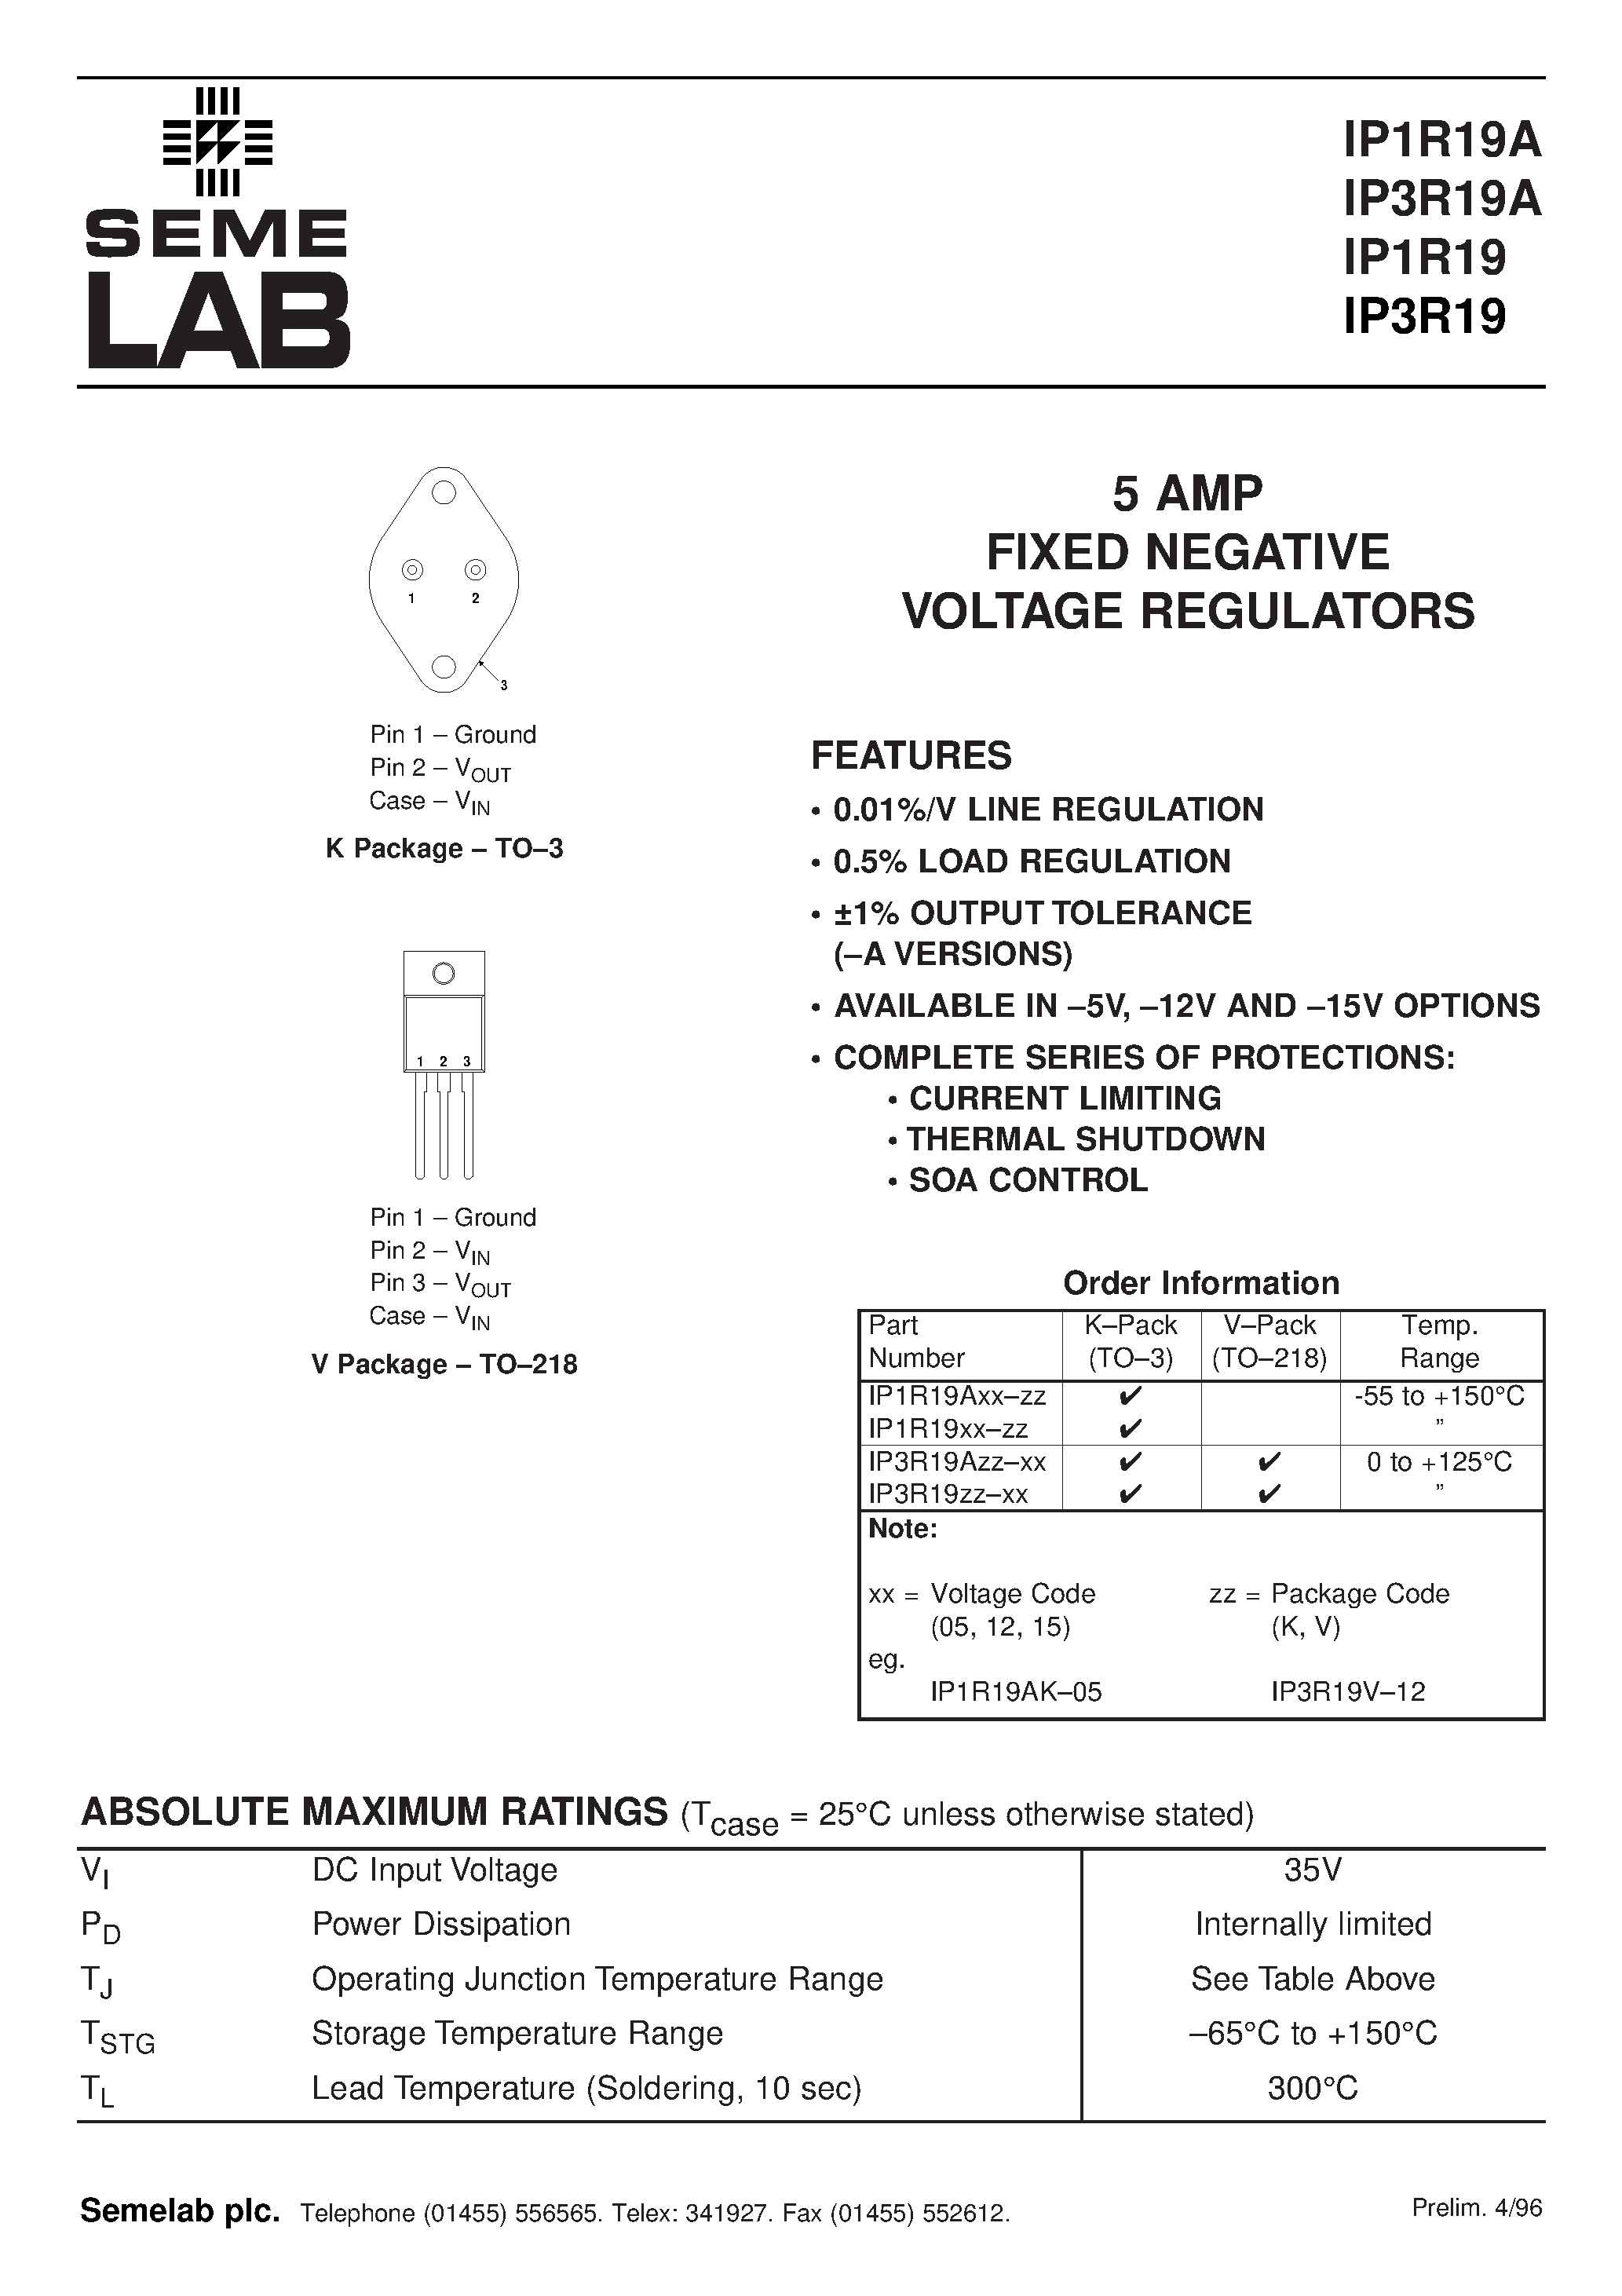 Datasheet IP1R19A05-K - 5 AMP FIXED NEGATIVE VOLTAGE REGULATORS page 1